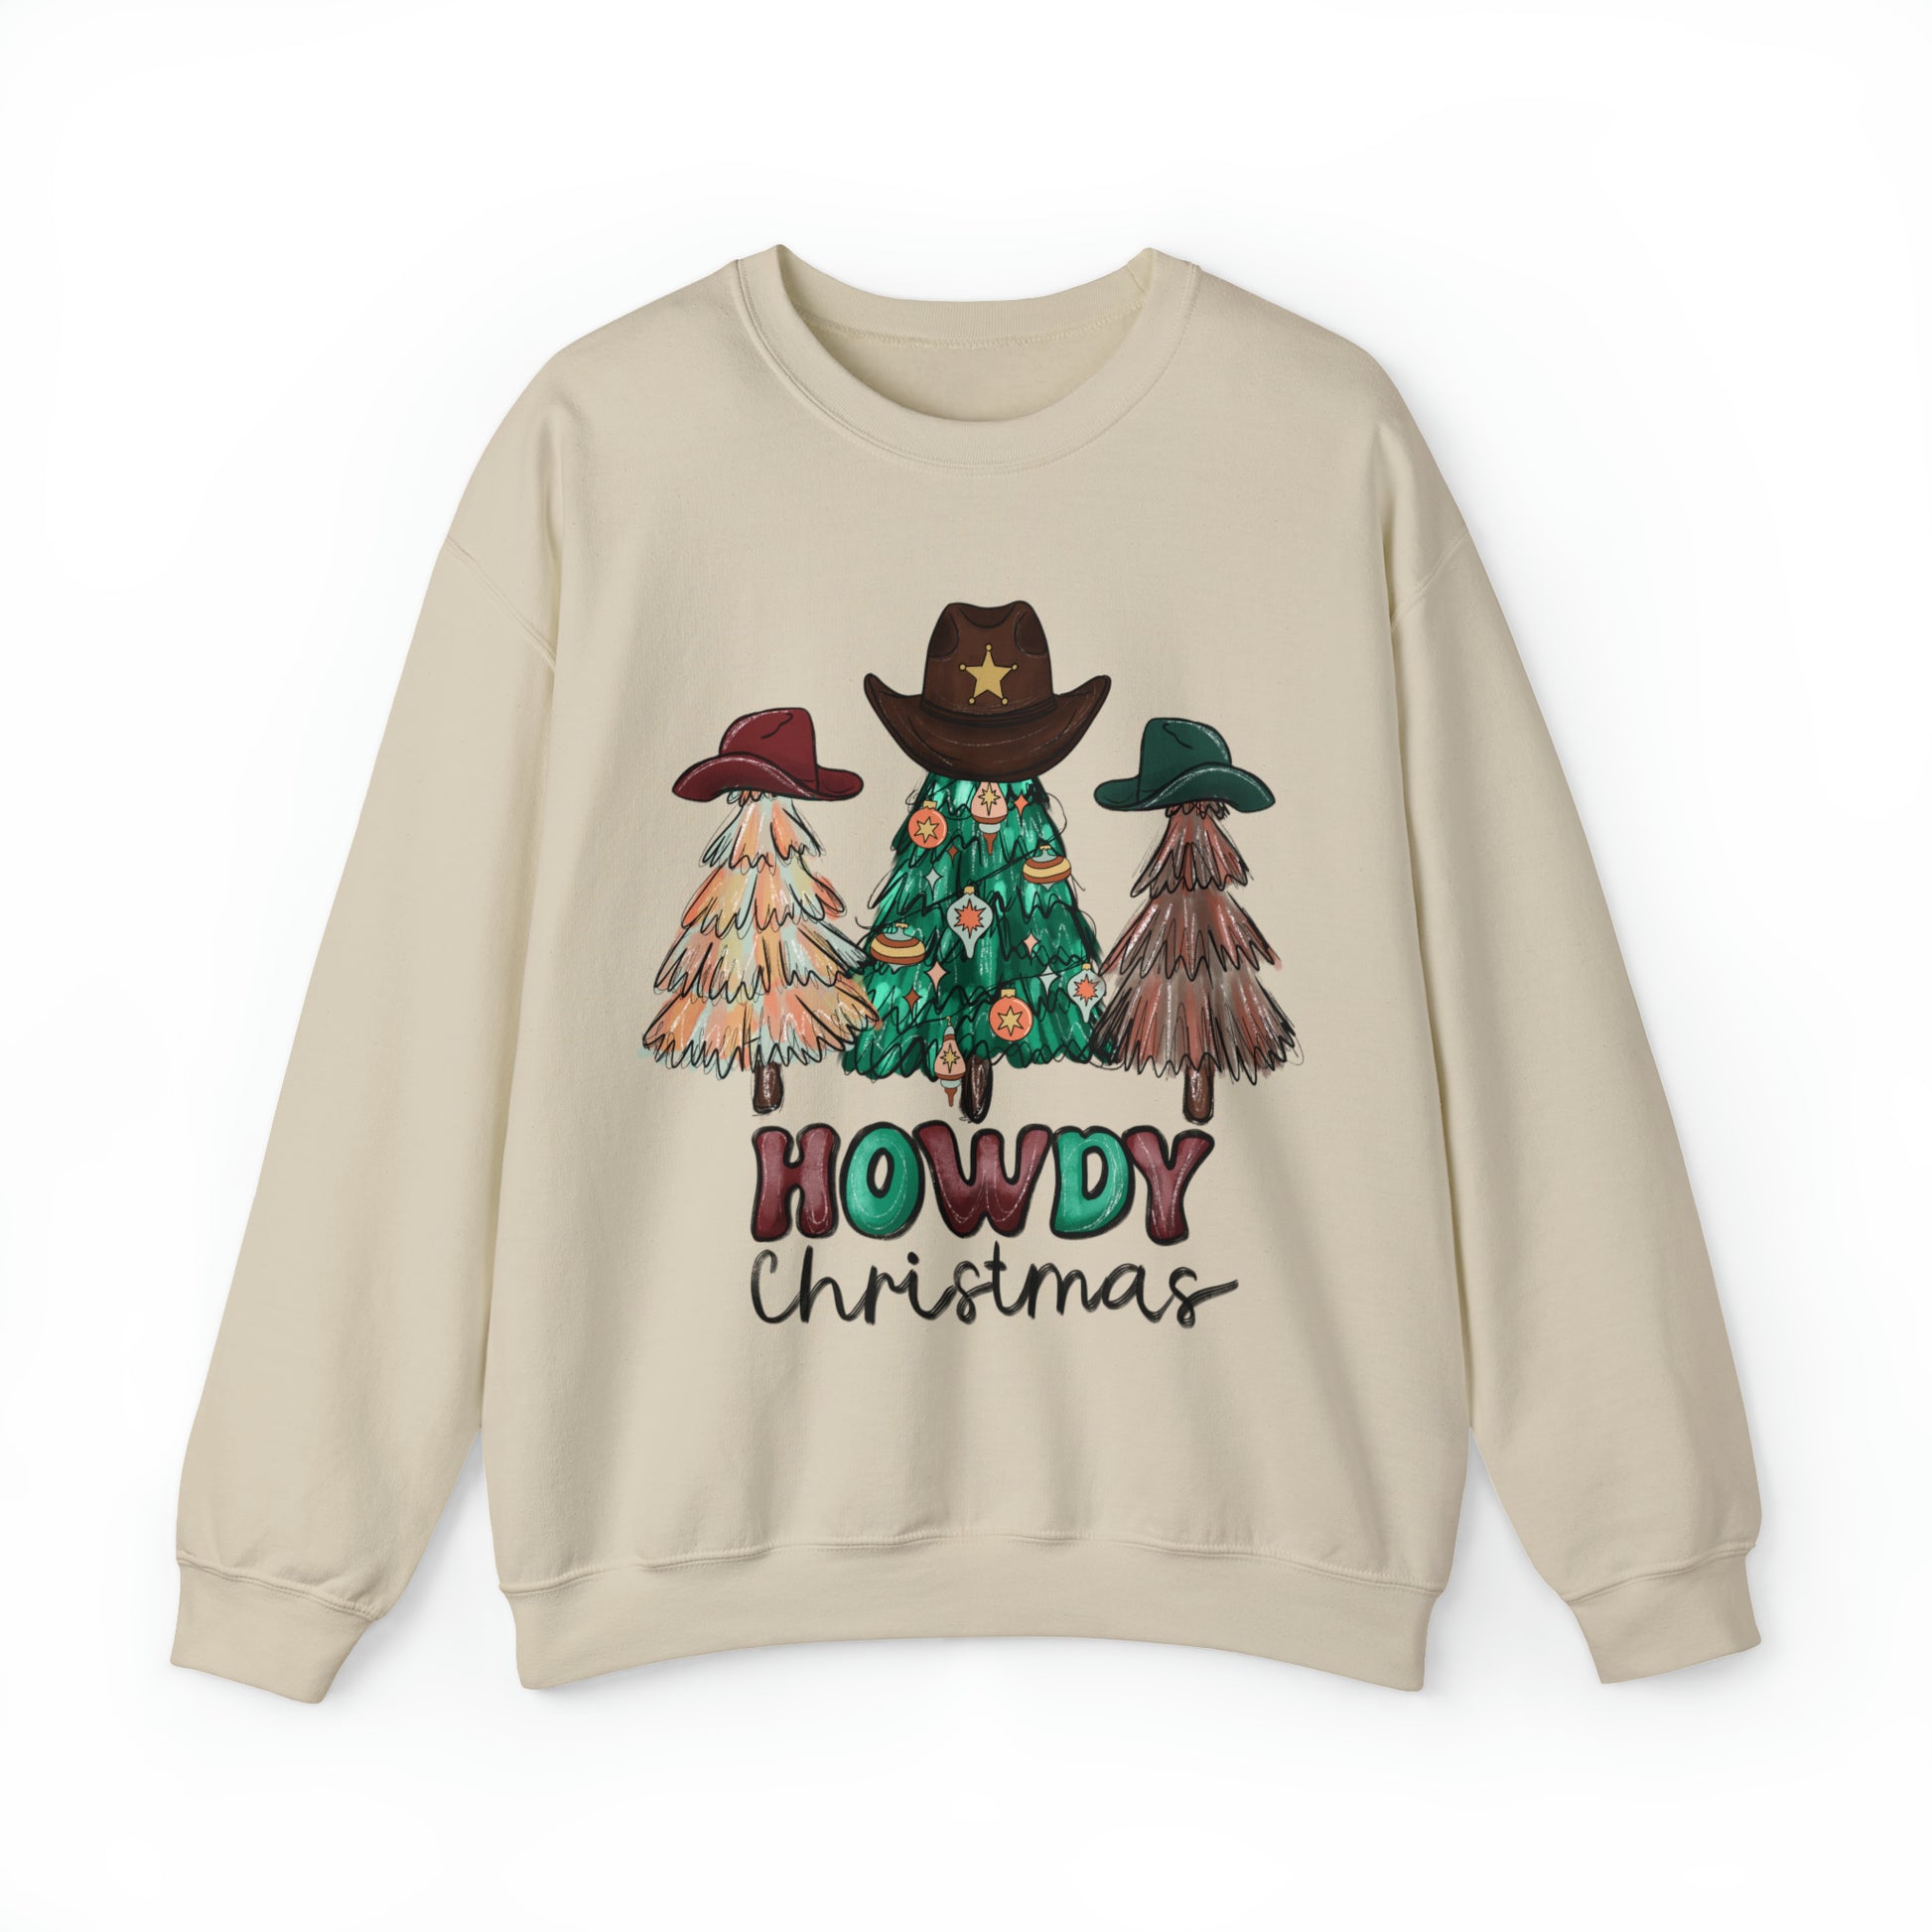 Howdy Christmas Western Themed Christmas Sweater